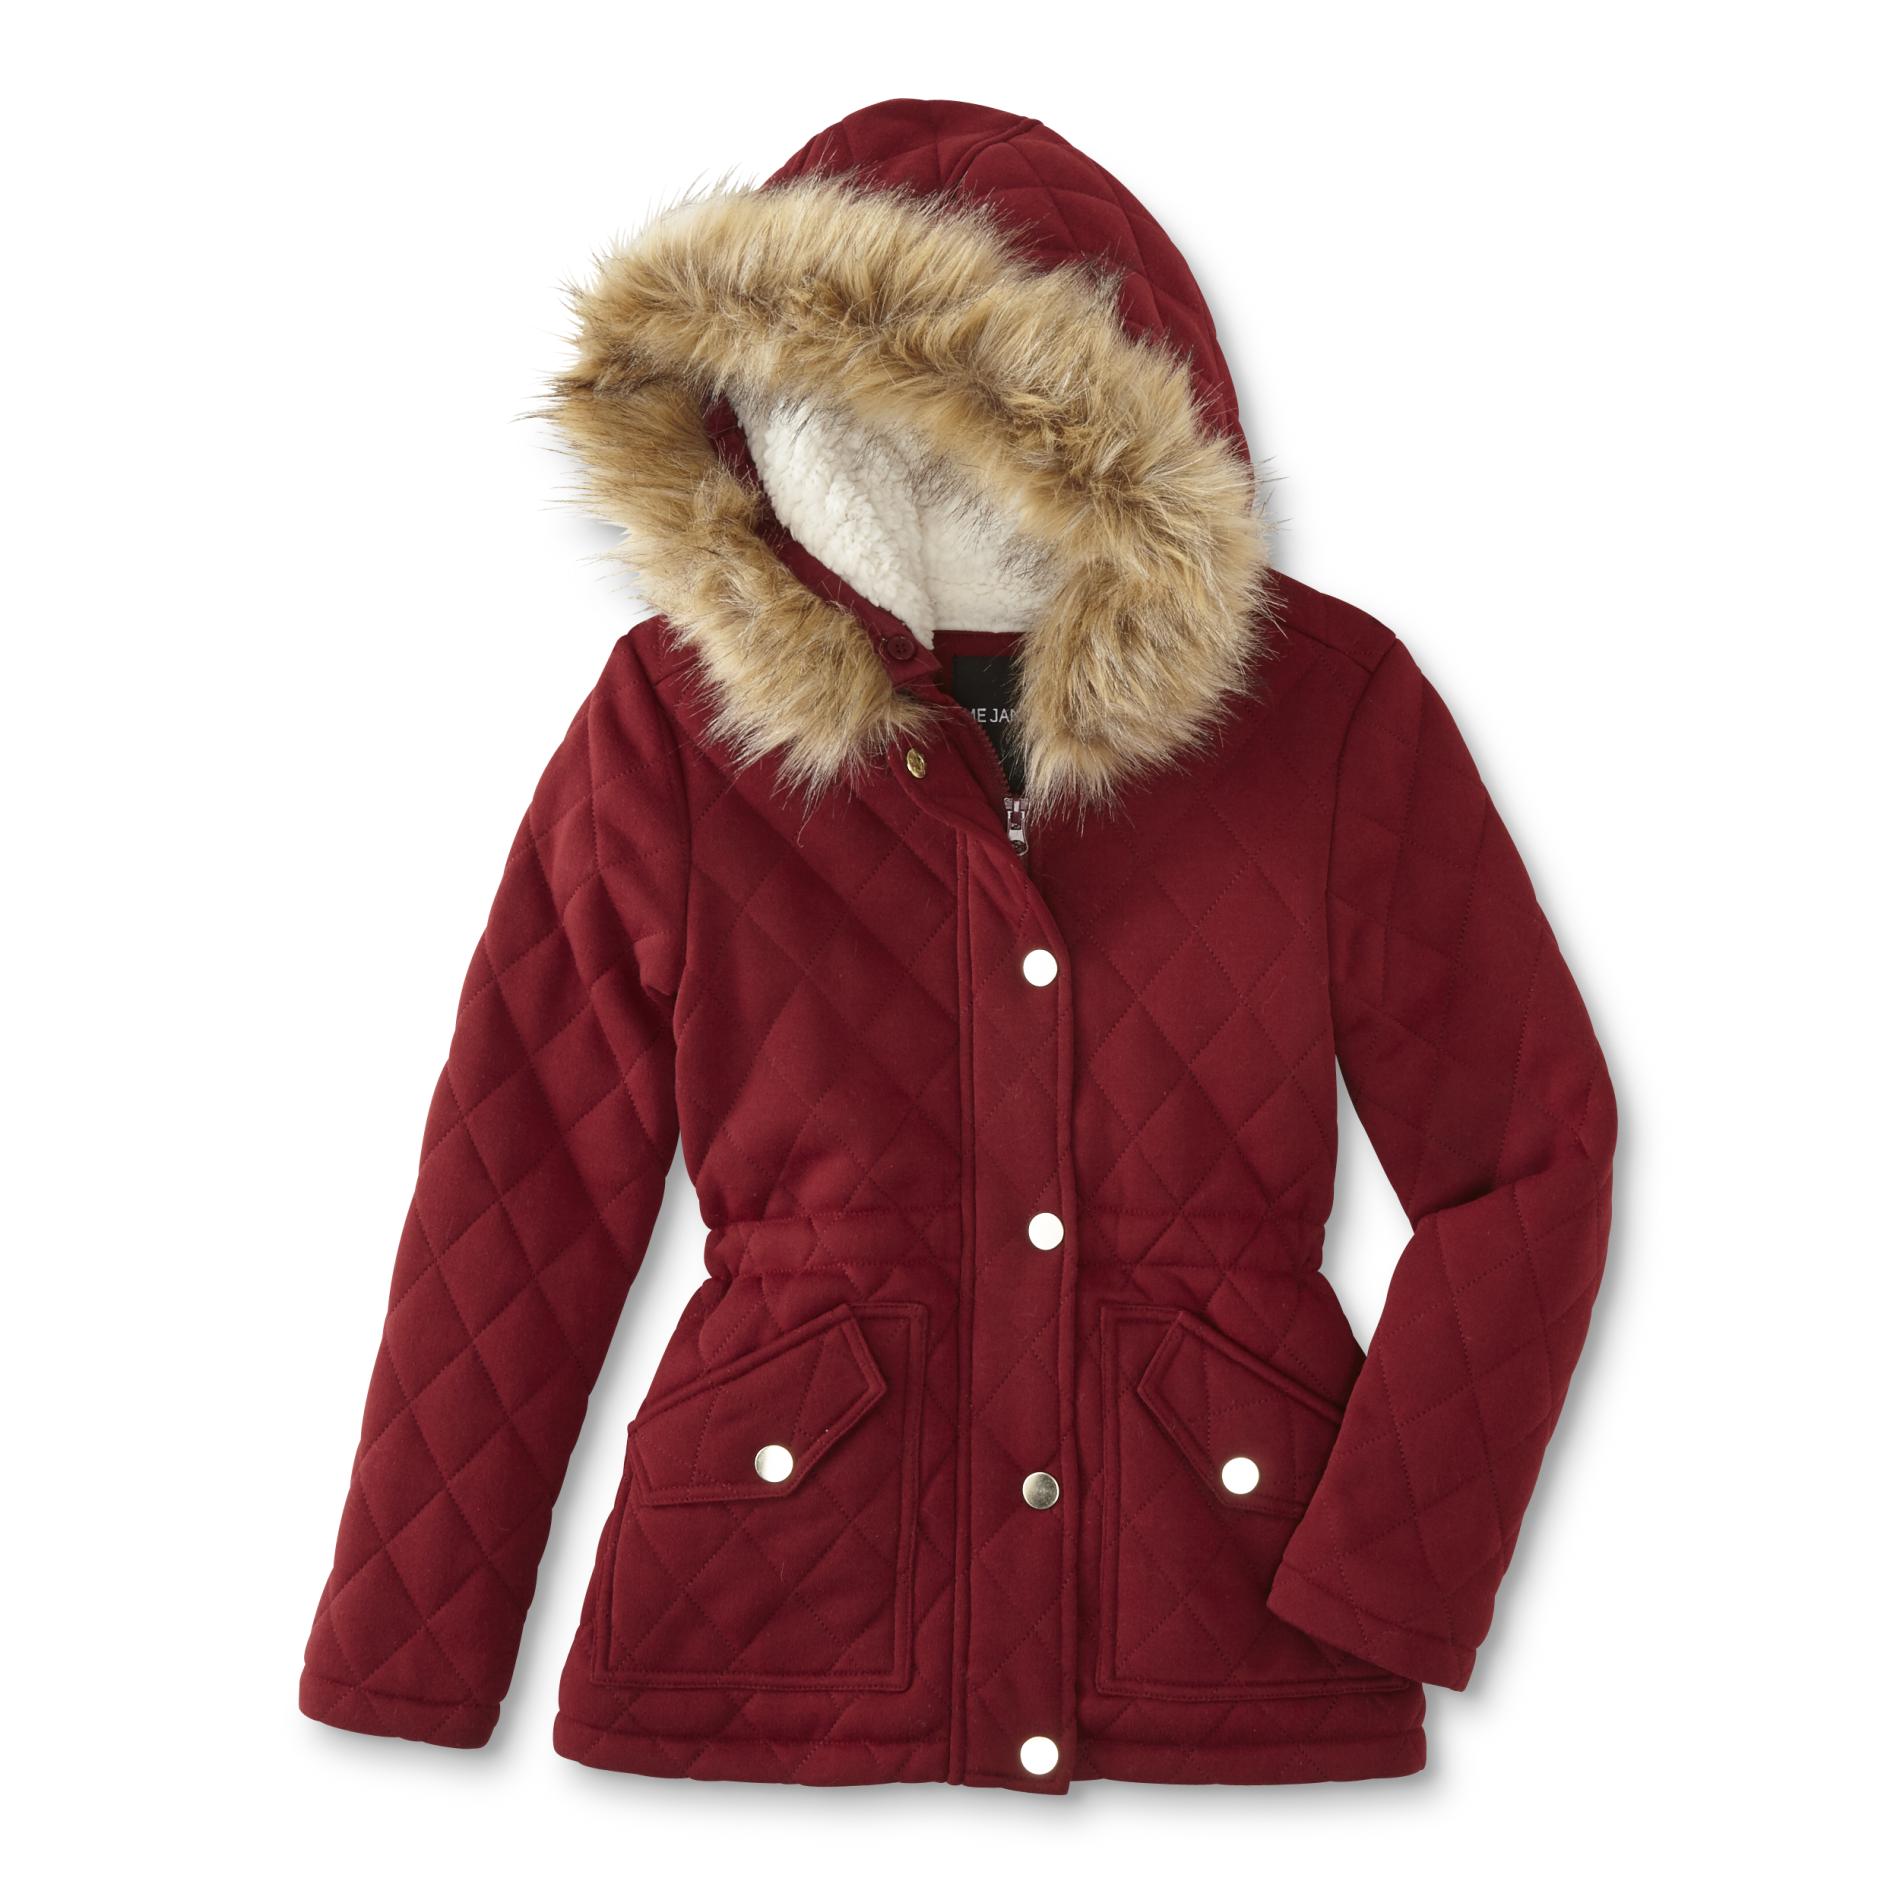 Girls' Coats \u0026 Jackets In Clothing at Kmart